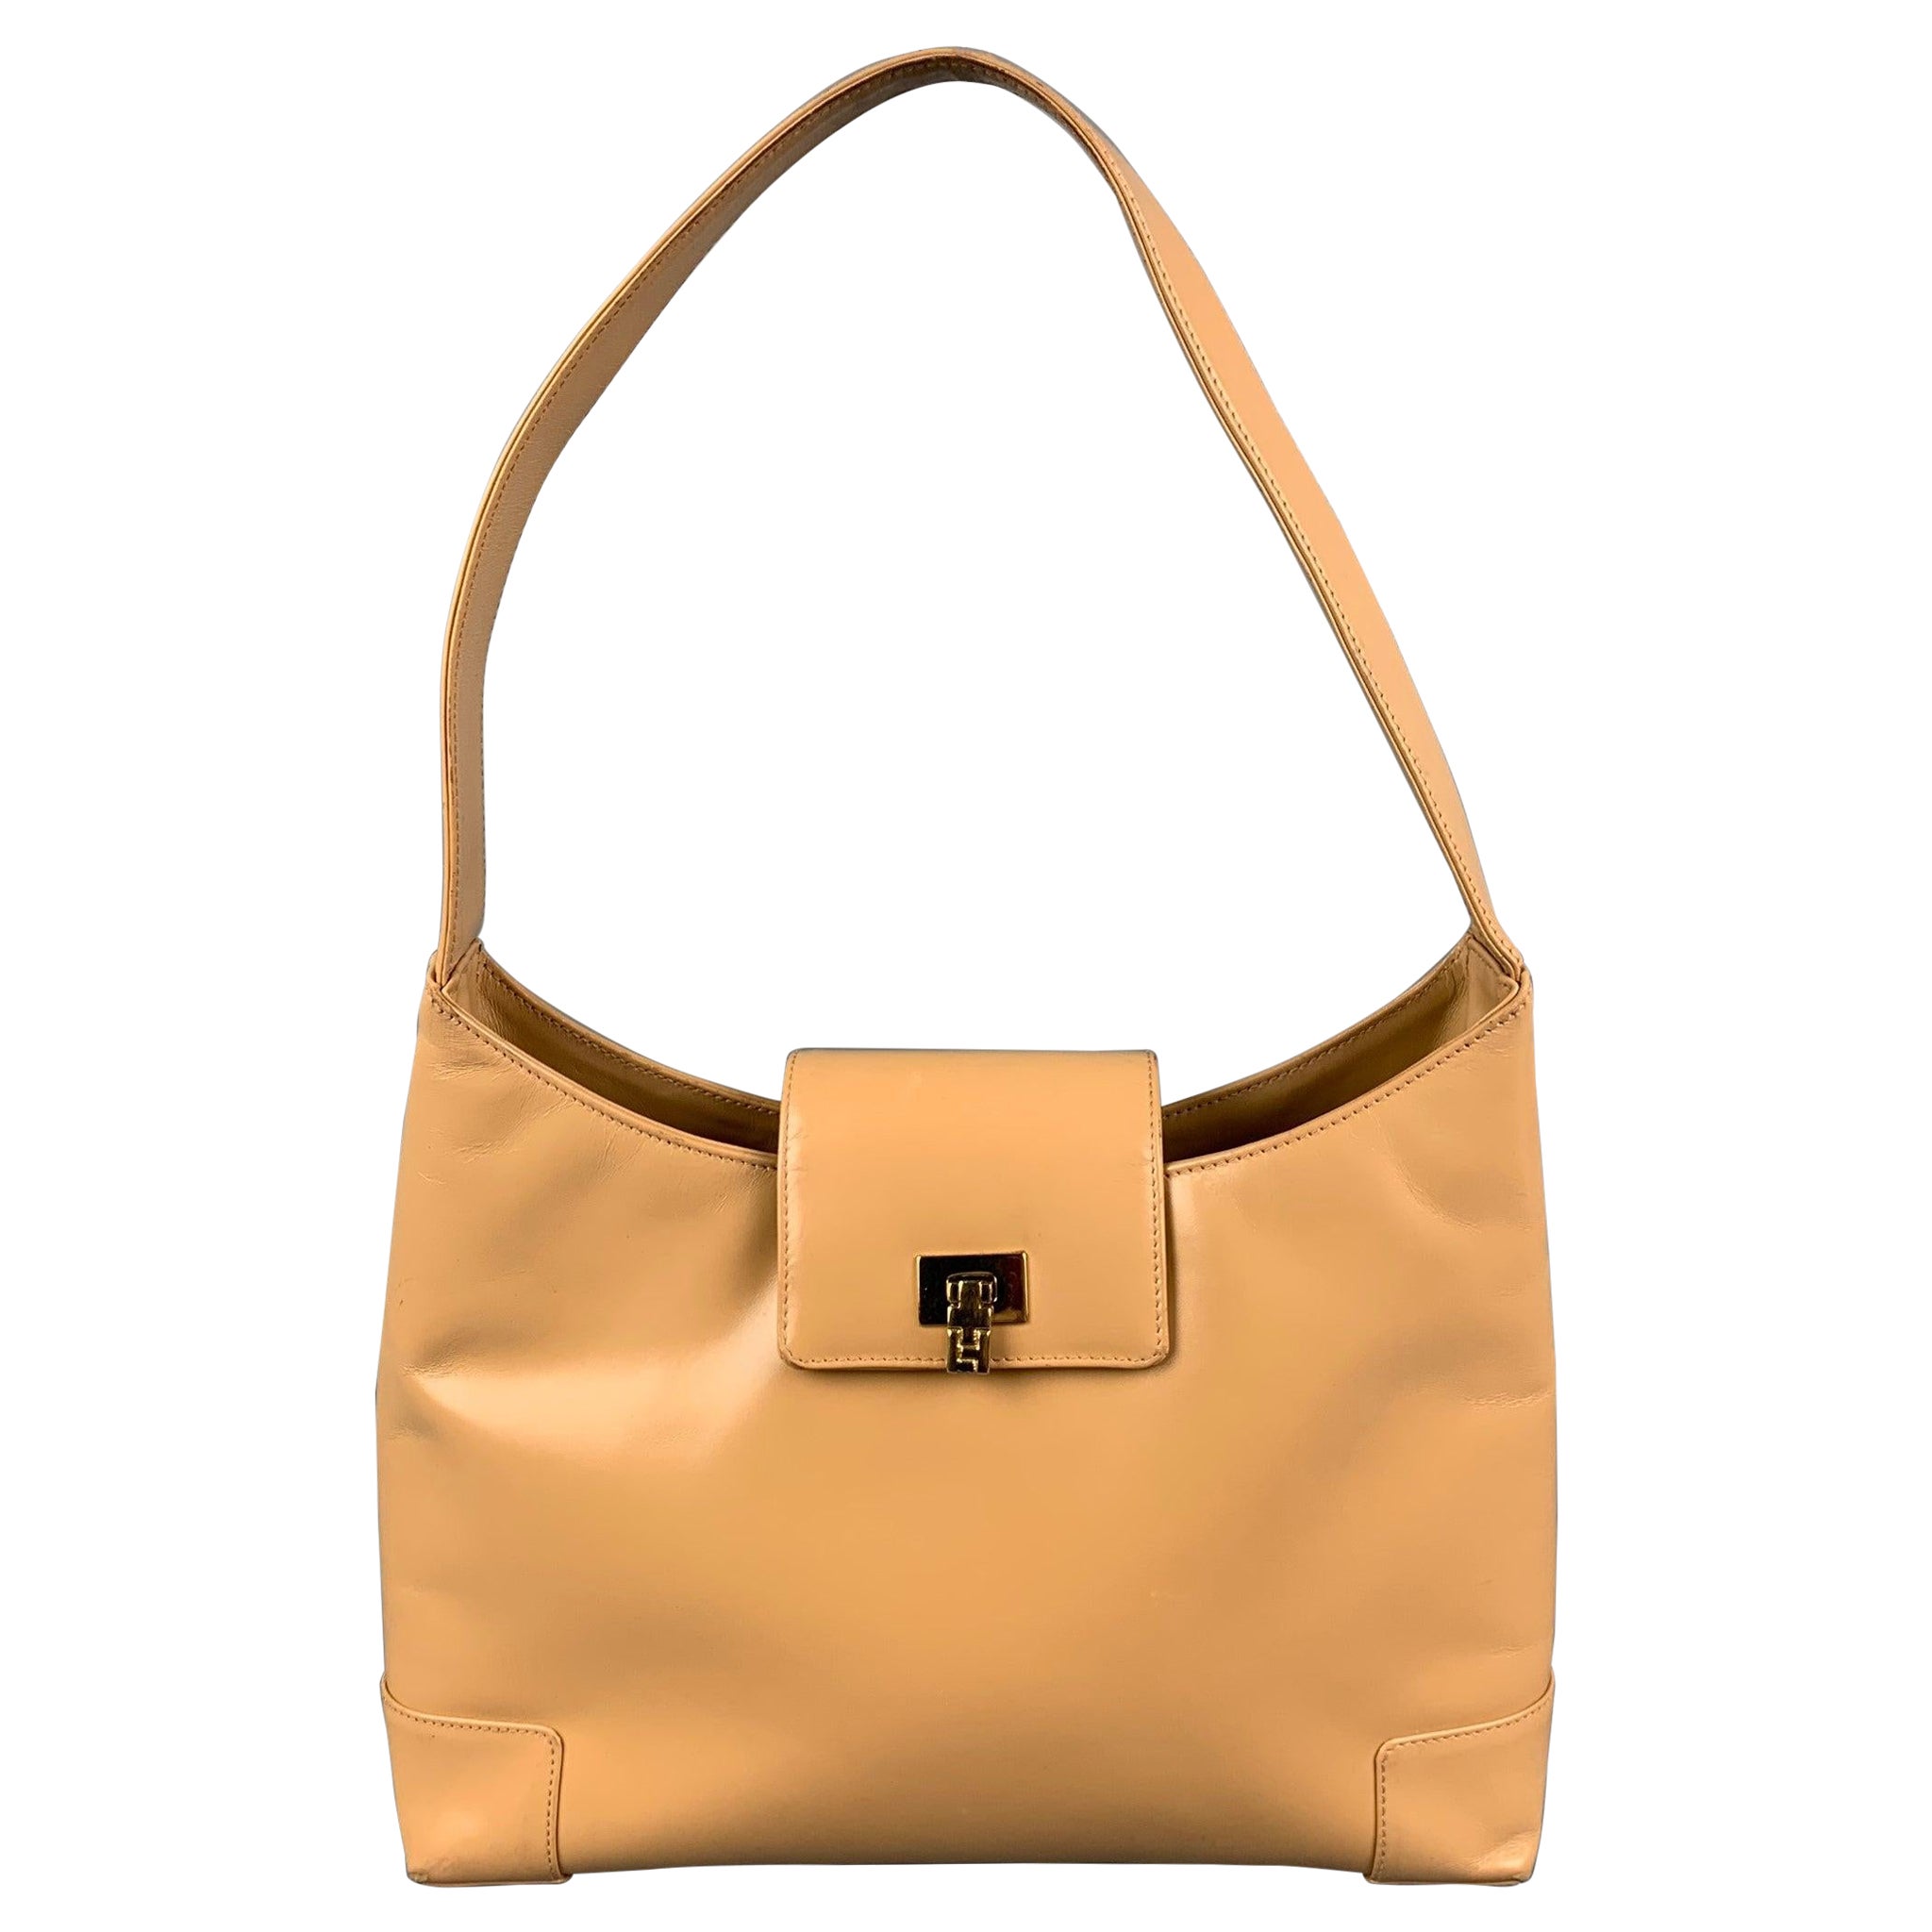 LAMBERTSON TRUEX Beige Leather Shoulder Bag Handbag For Sale